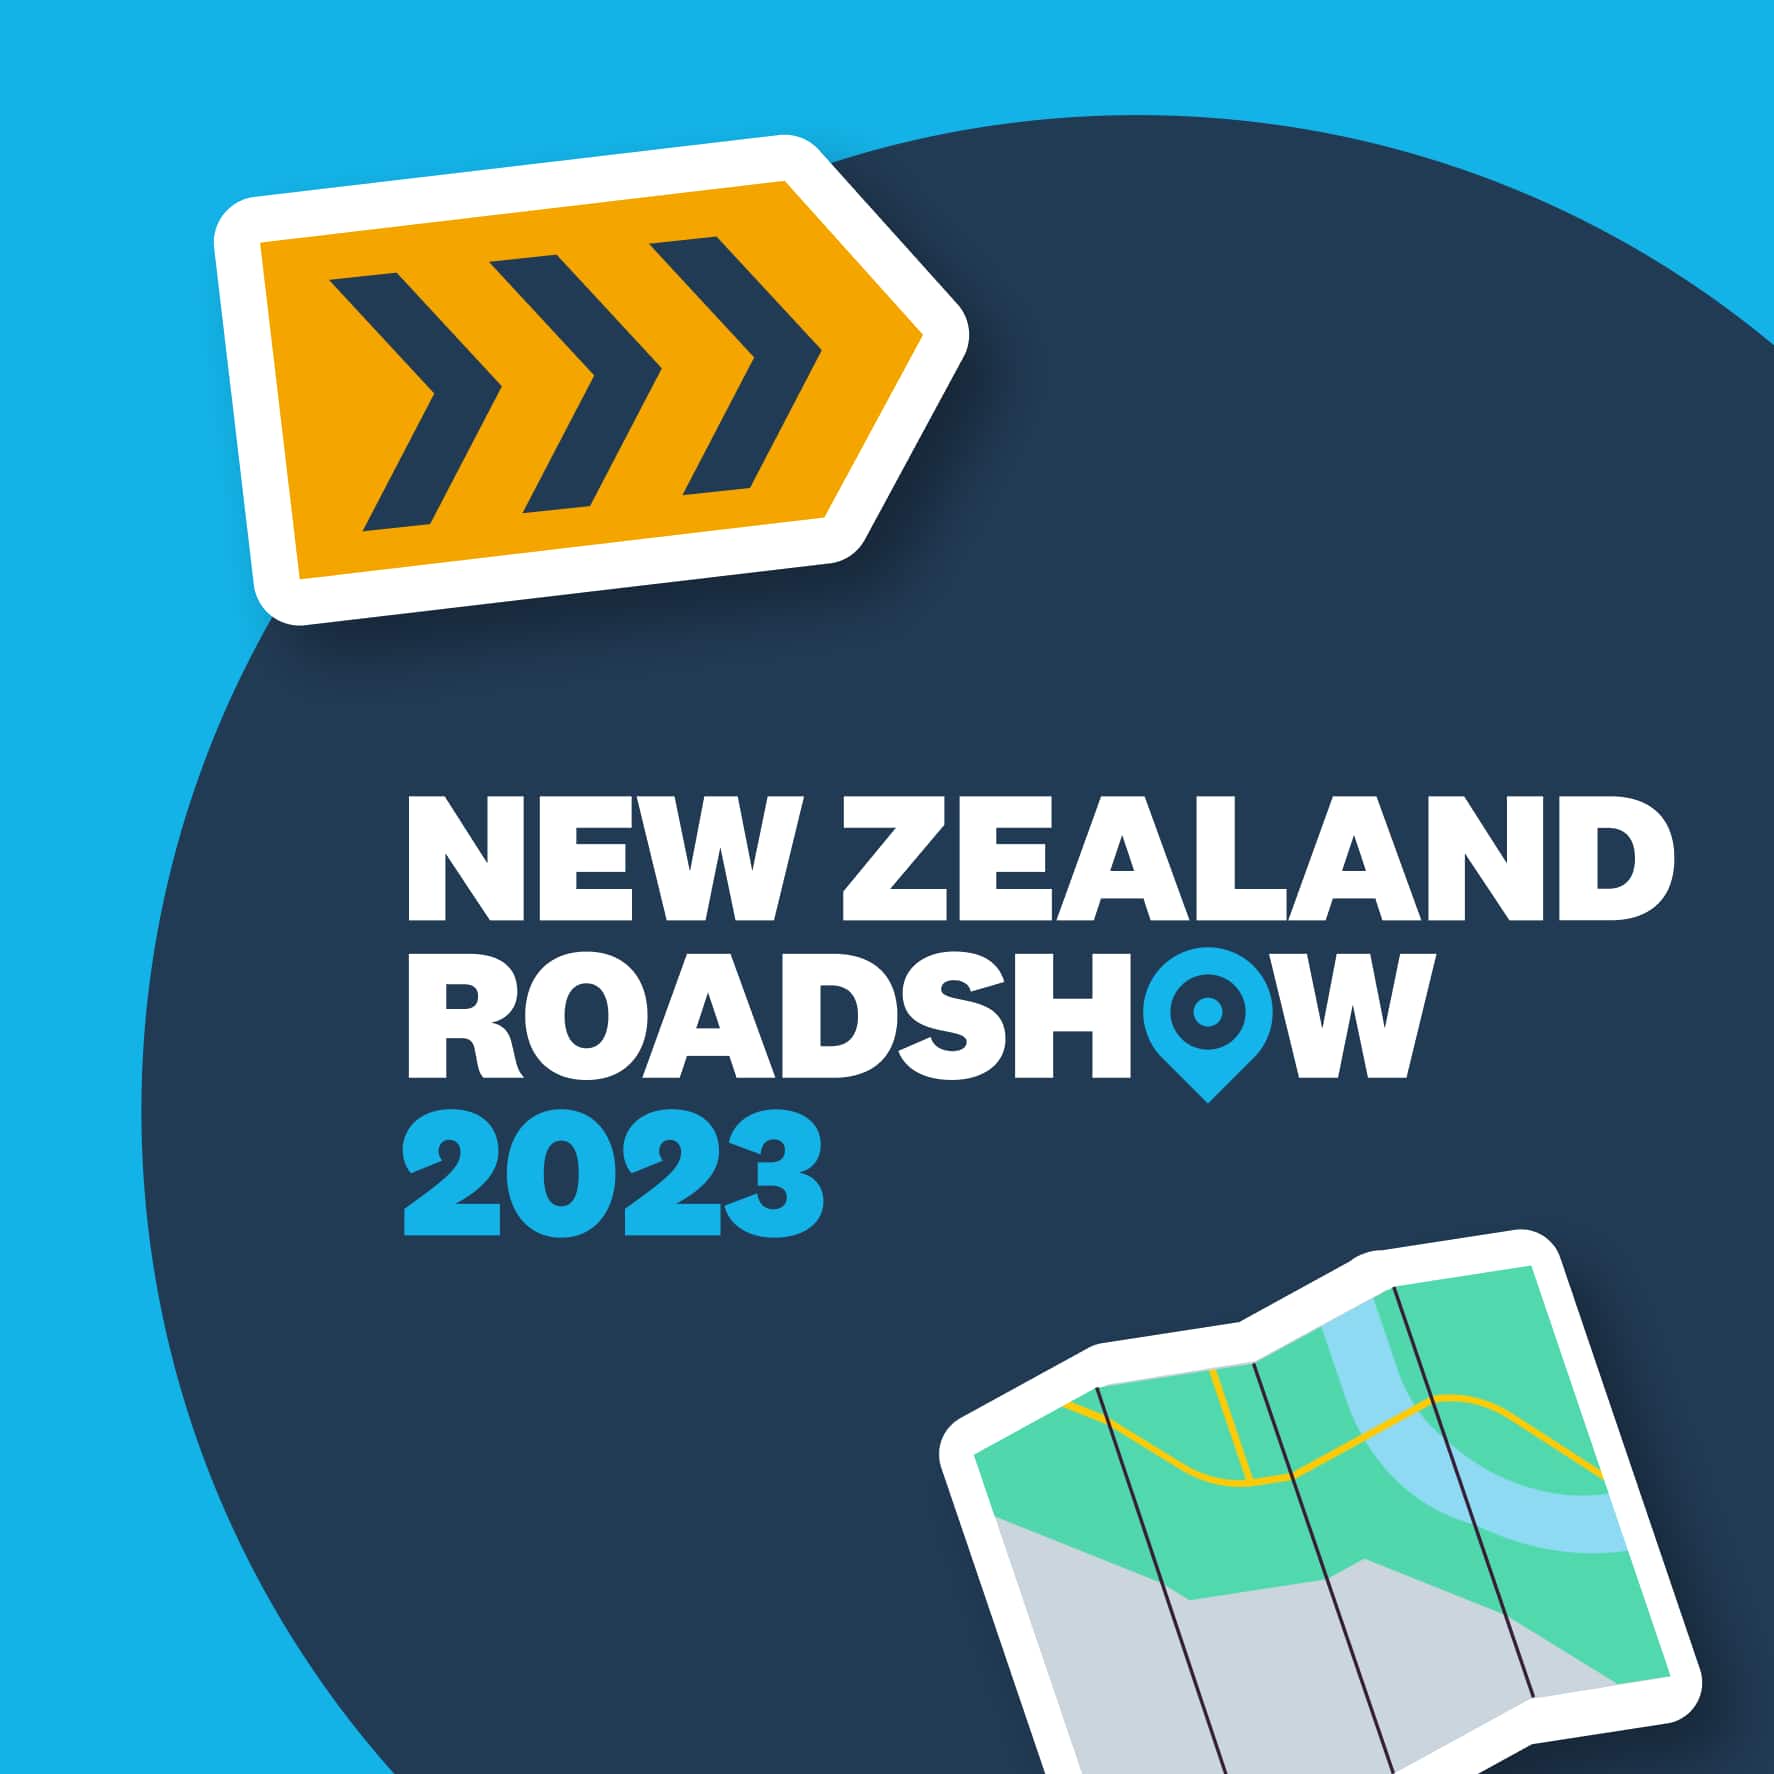 NZ Roadshow branding